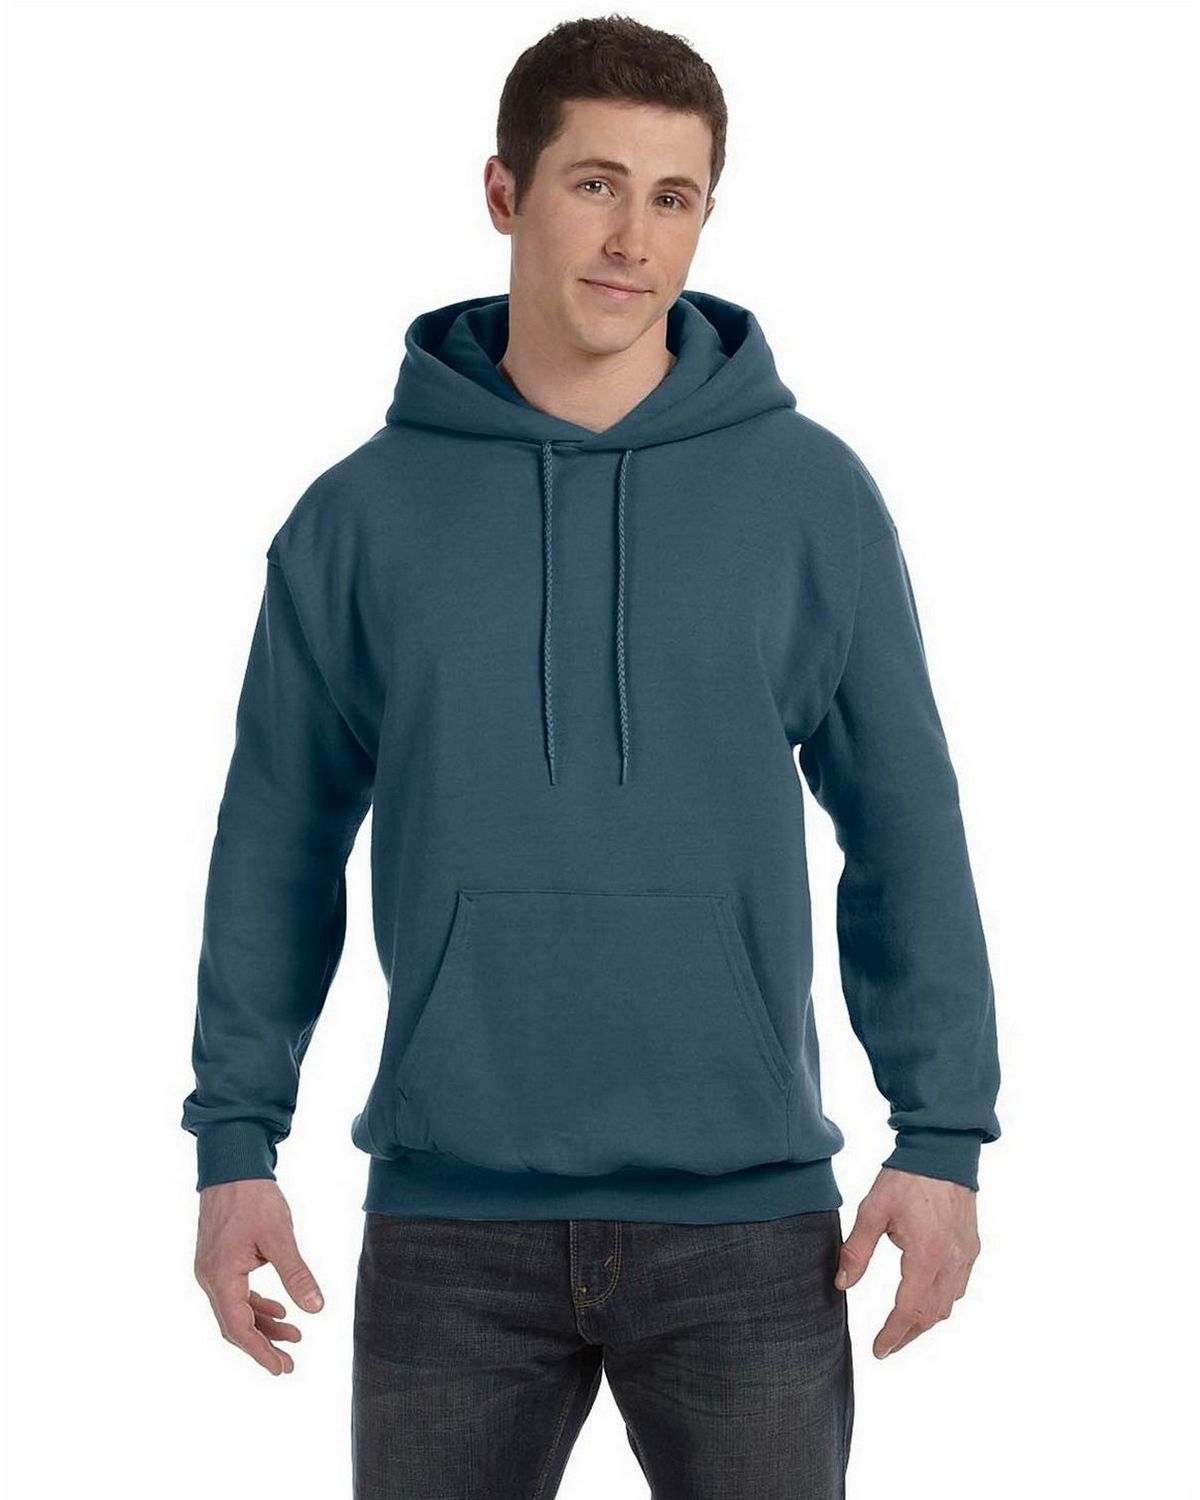 Buy Hanes P170 ComfortBlend 50/50 Pullover Hood